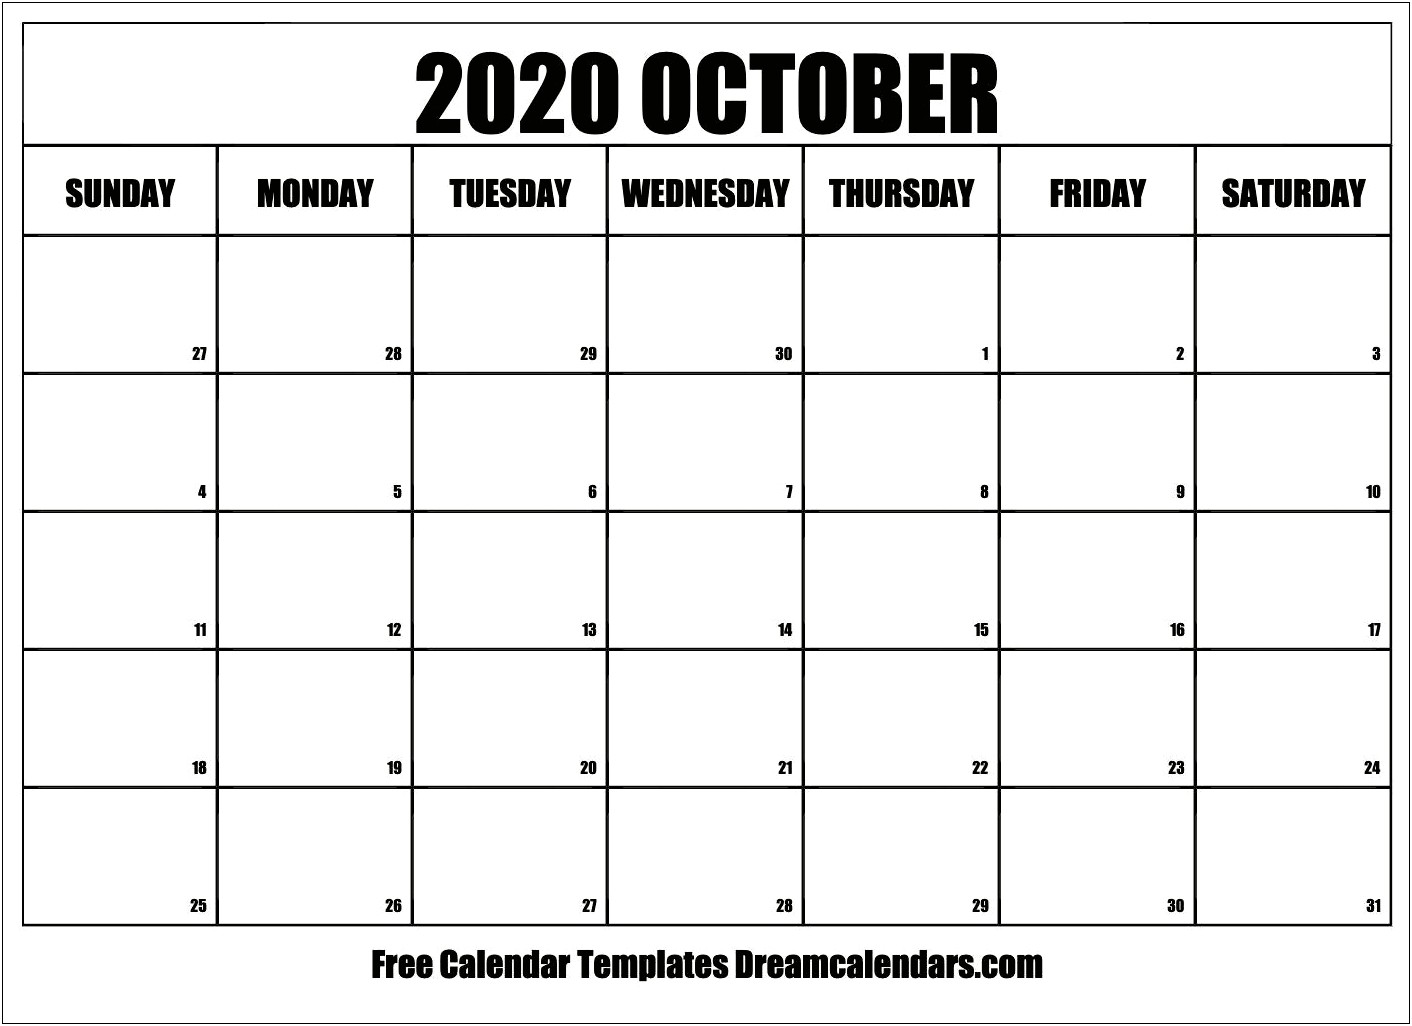 Free Blank Calendar Templates For 2020